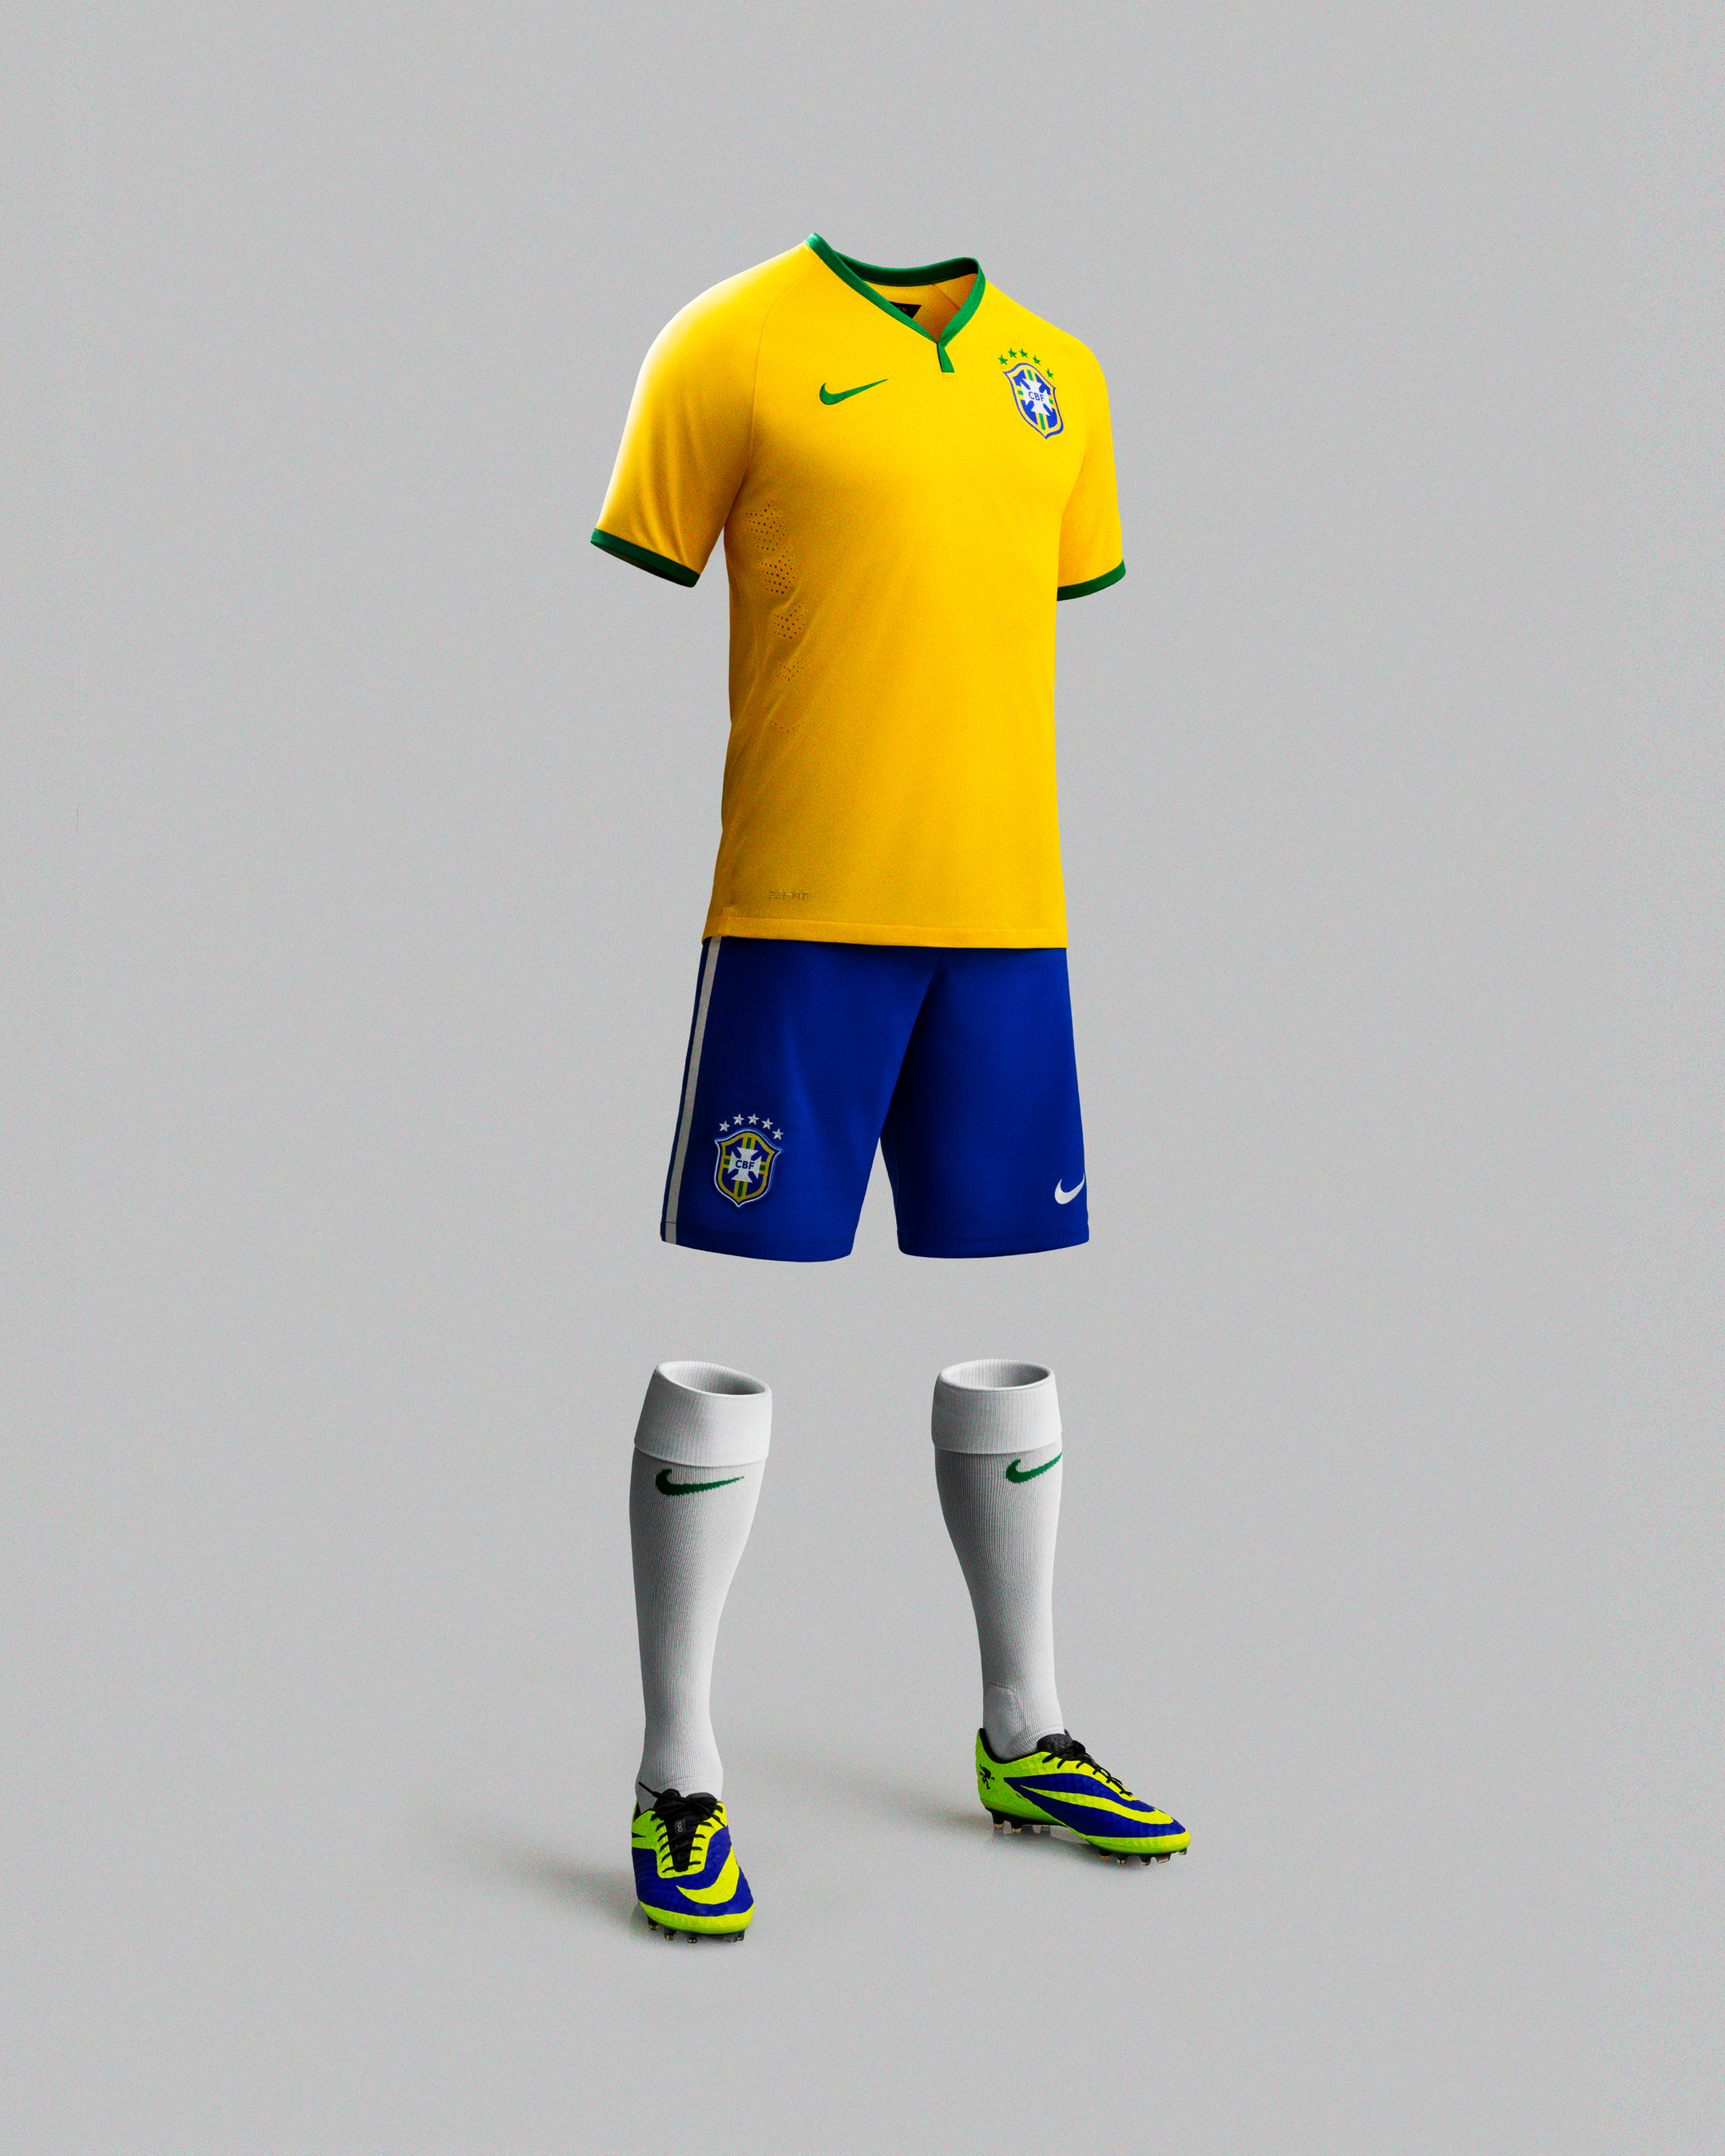 NIKE Unveils 2014 Brasil National Team Kit